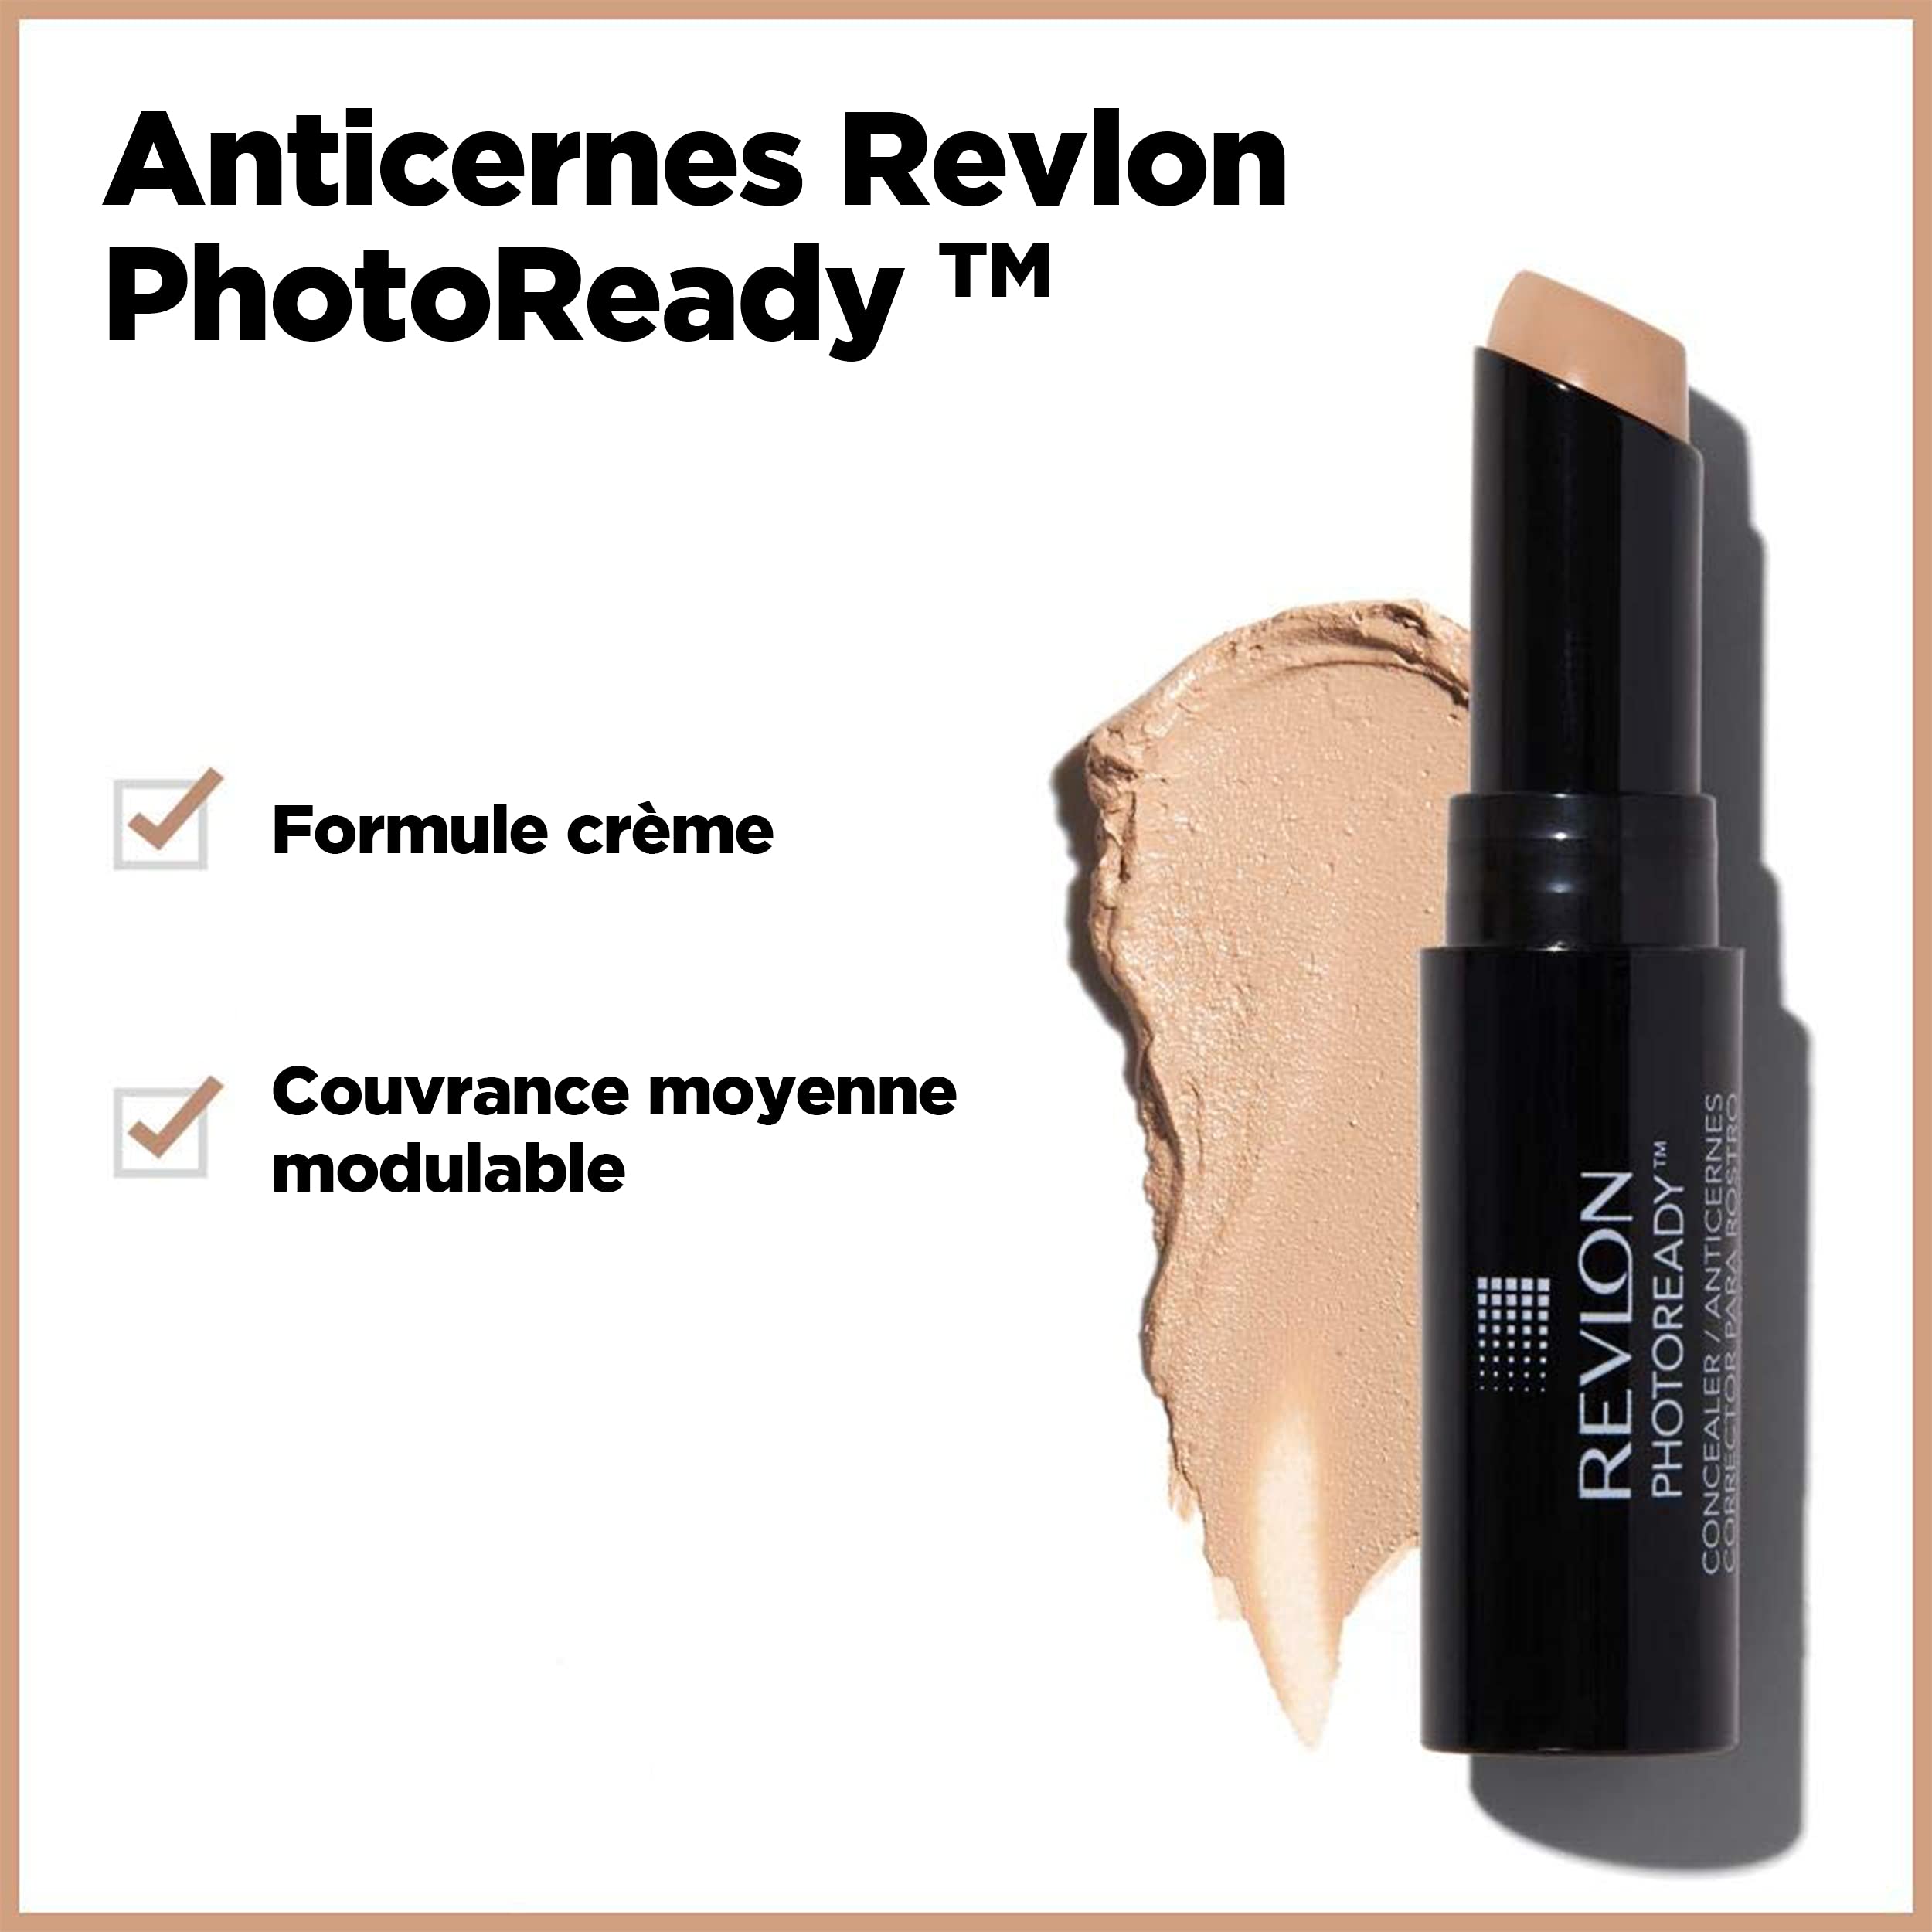 Revlon Concealer Stick, PhotoReady Face Makeup for All Skin Types, Longwear Medium- Full Coverage with Creamy Finish, Lightweight Formula, 003 Light Medium, 0.11 Oz